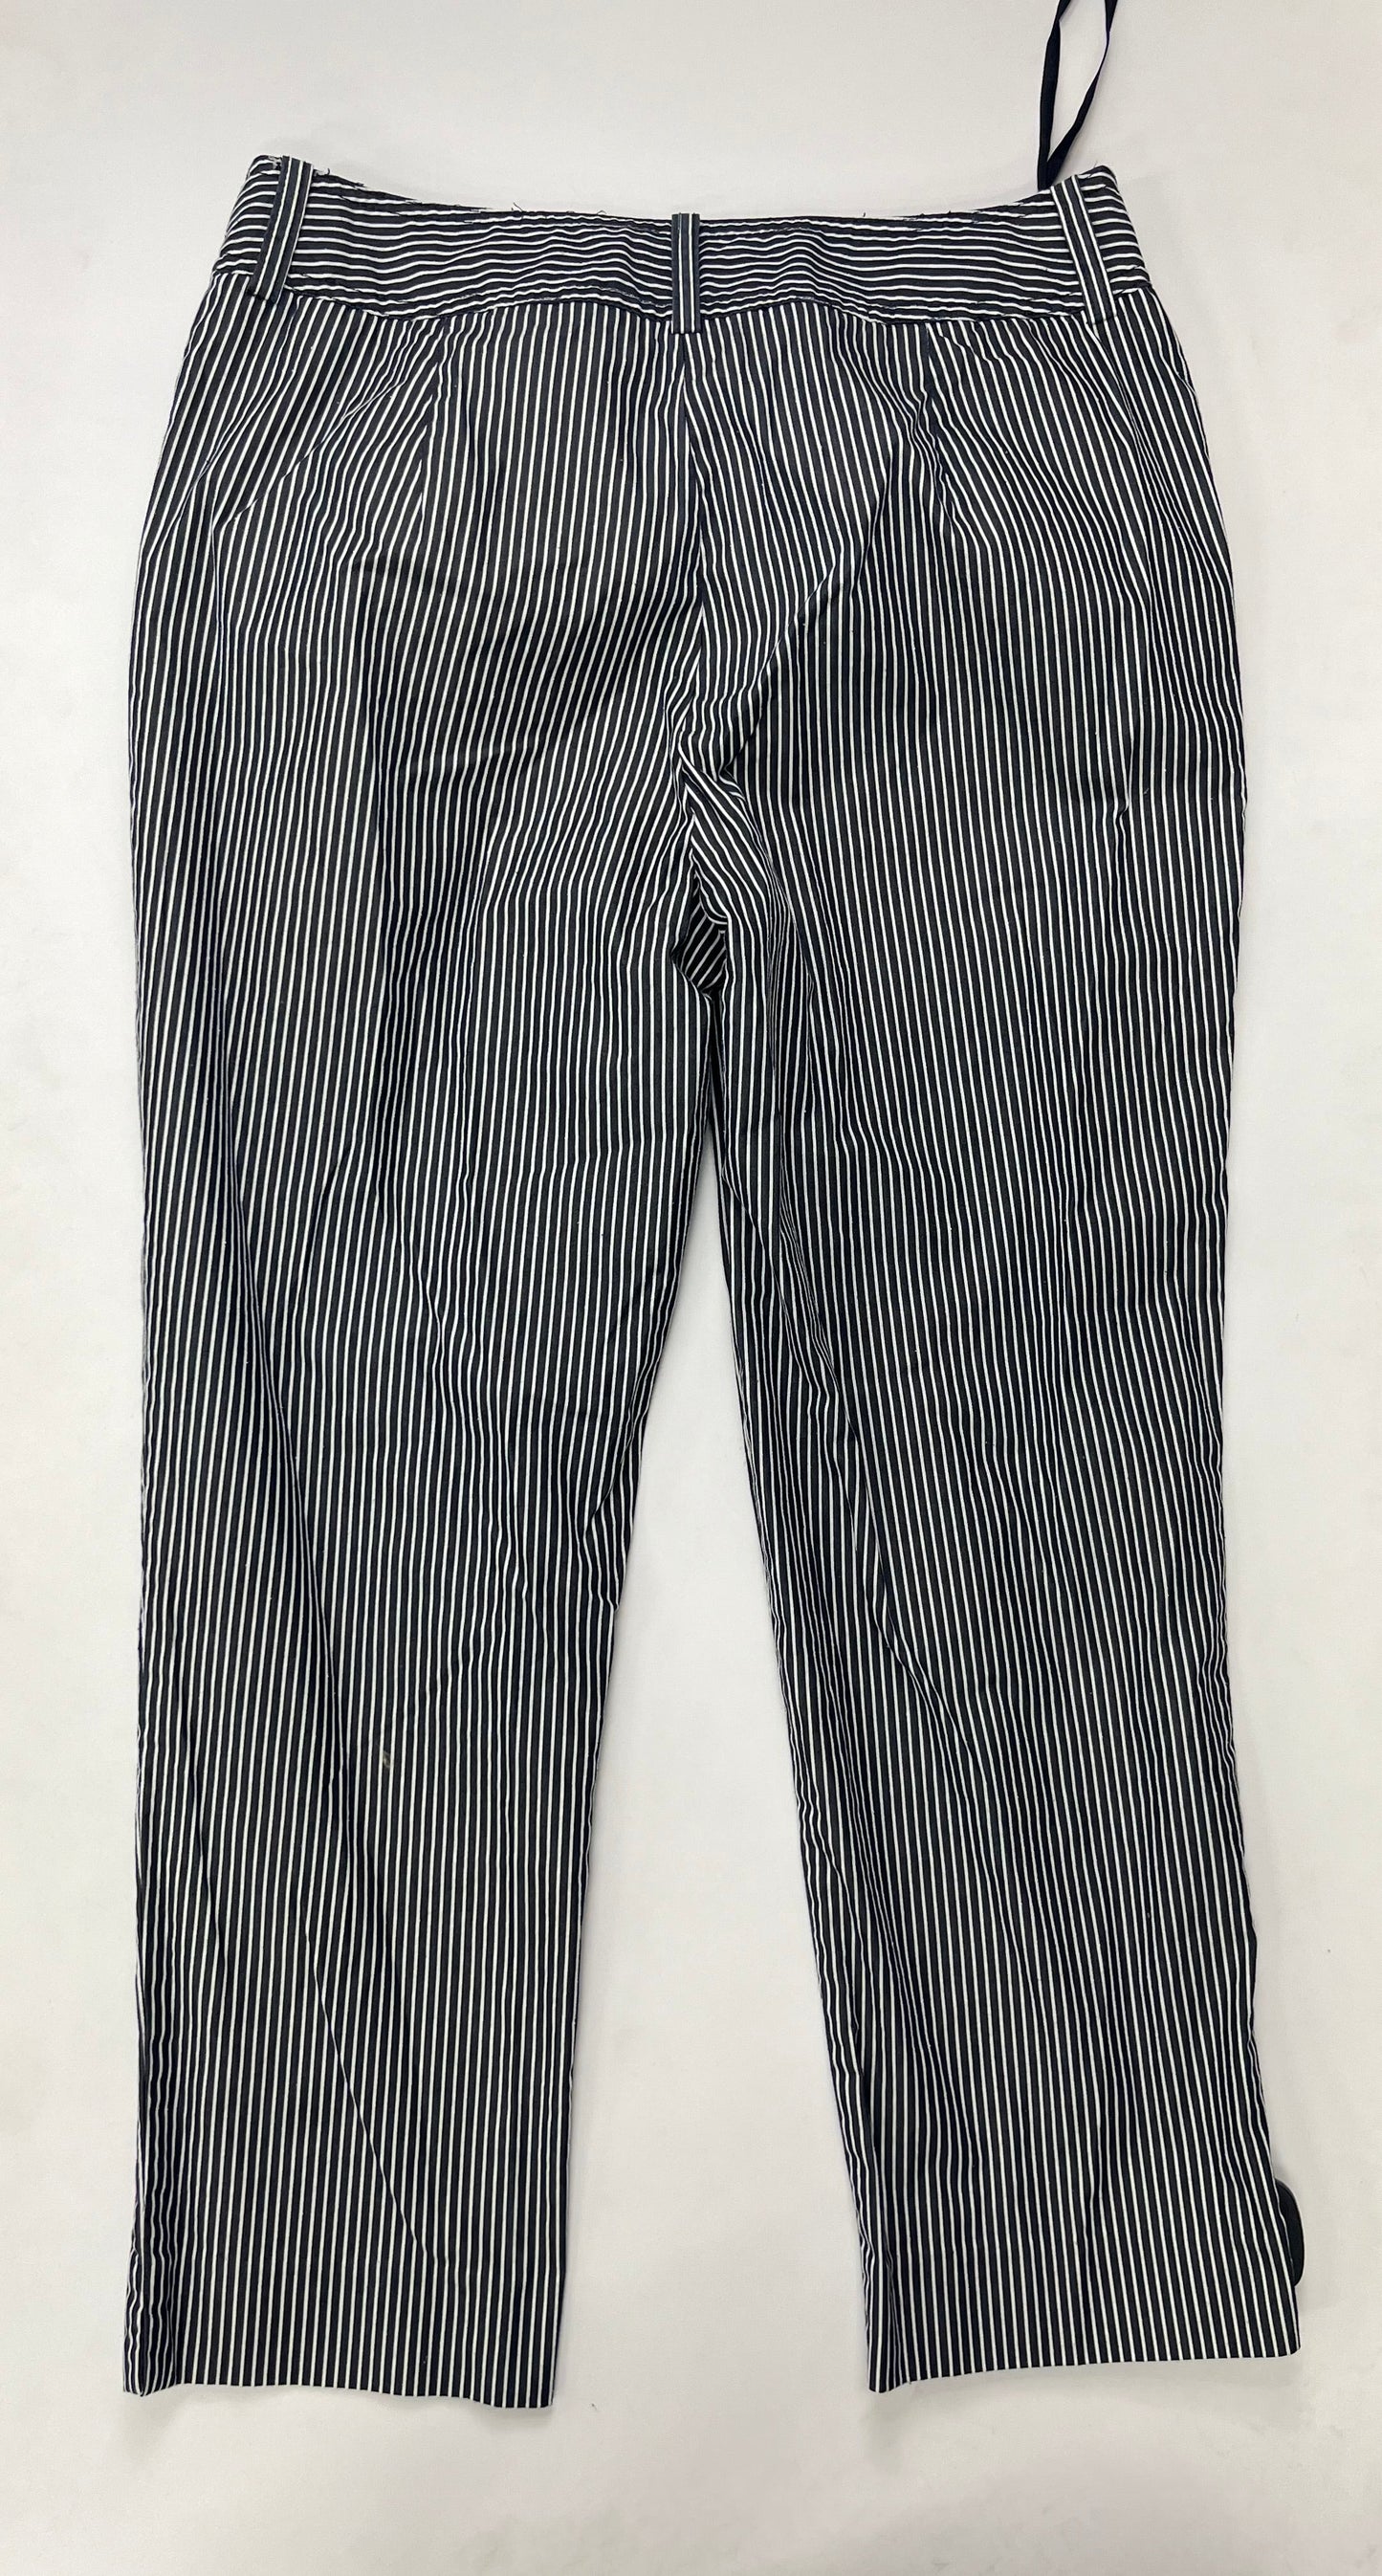 Striped Pants Ankle Jones New York, Size 8